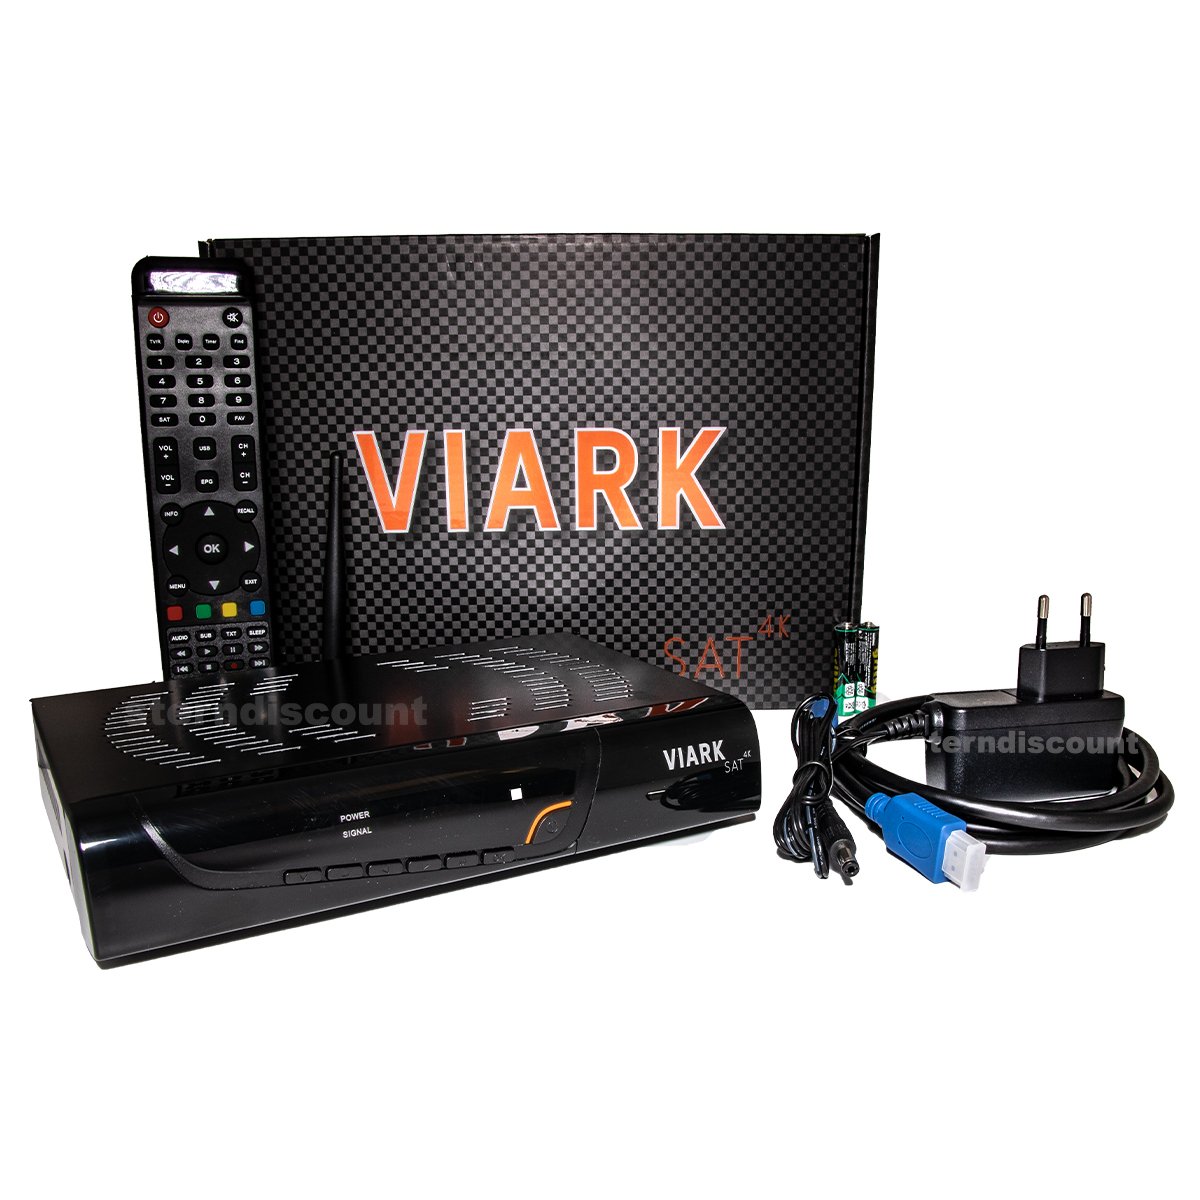 Viark Sat 4K satellite receiver 4K Multistream UHD DVB-S2X H.265 HEVC 60fps  with LAN and USB WiFi antenna - AliExpress